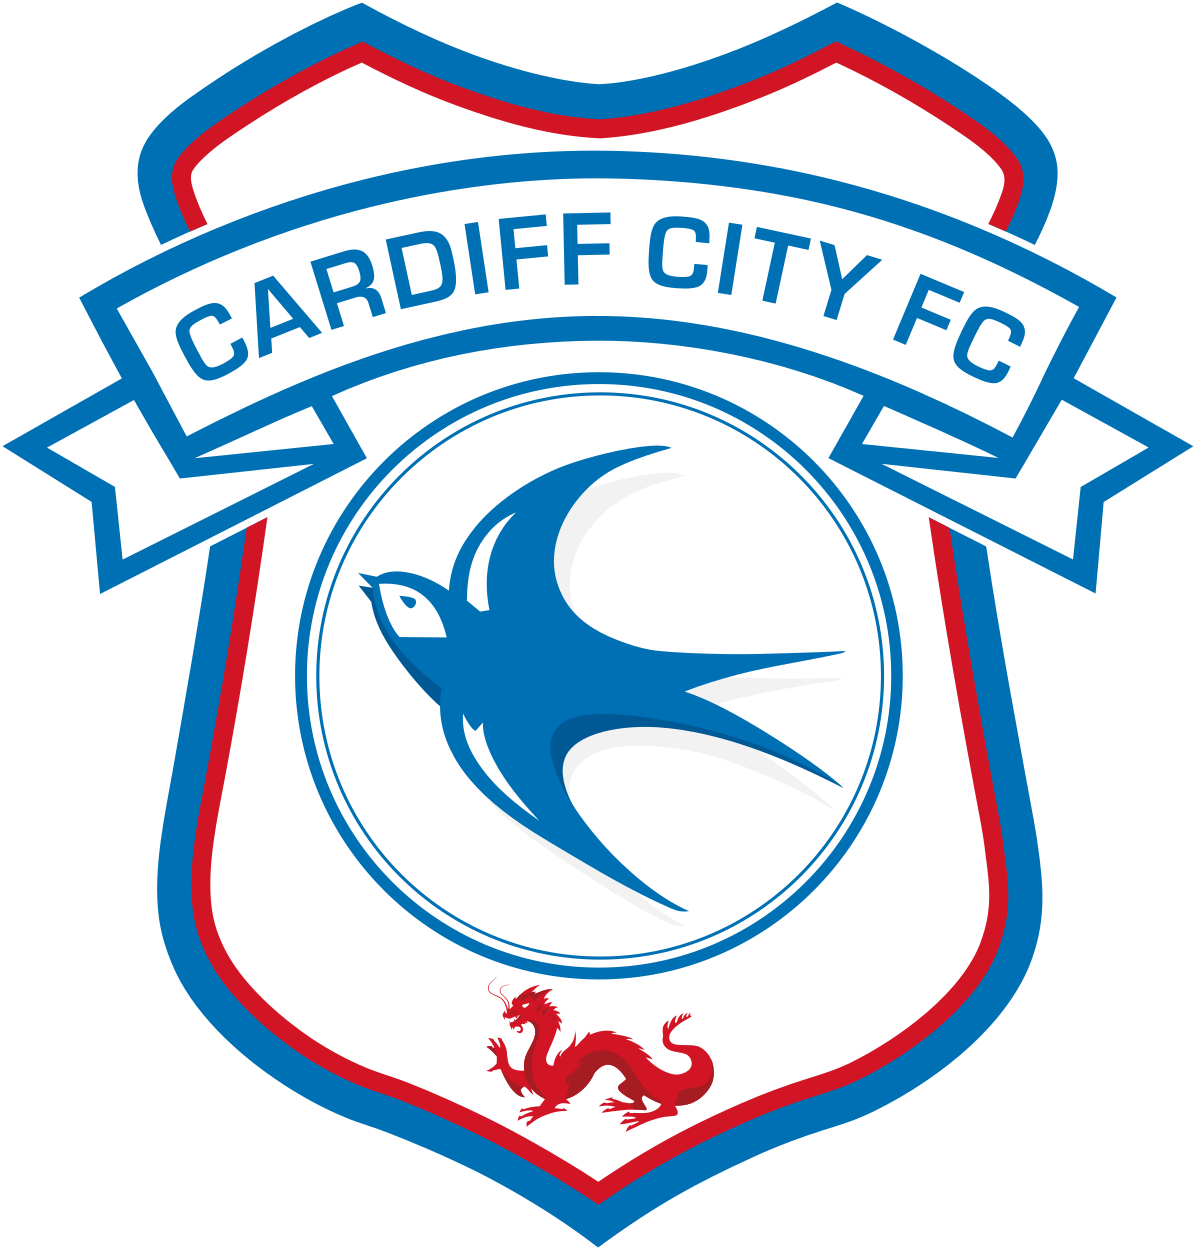 Cardiff City F C Logo PNG Image Background